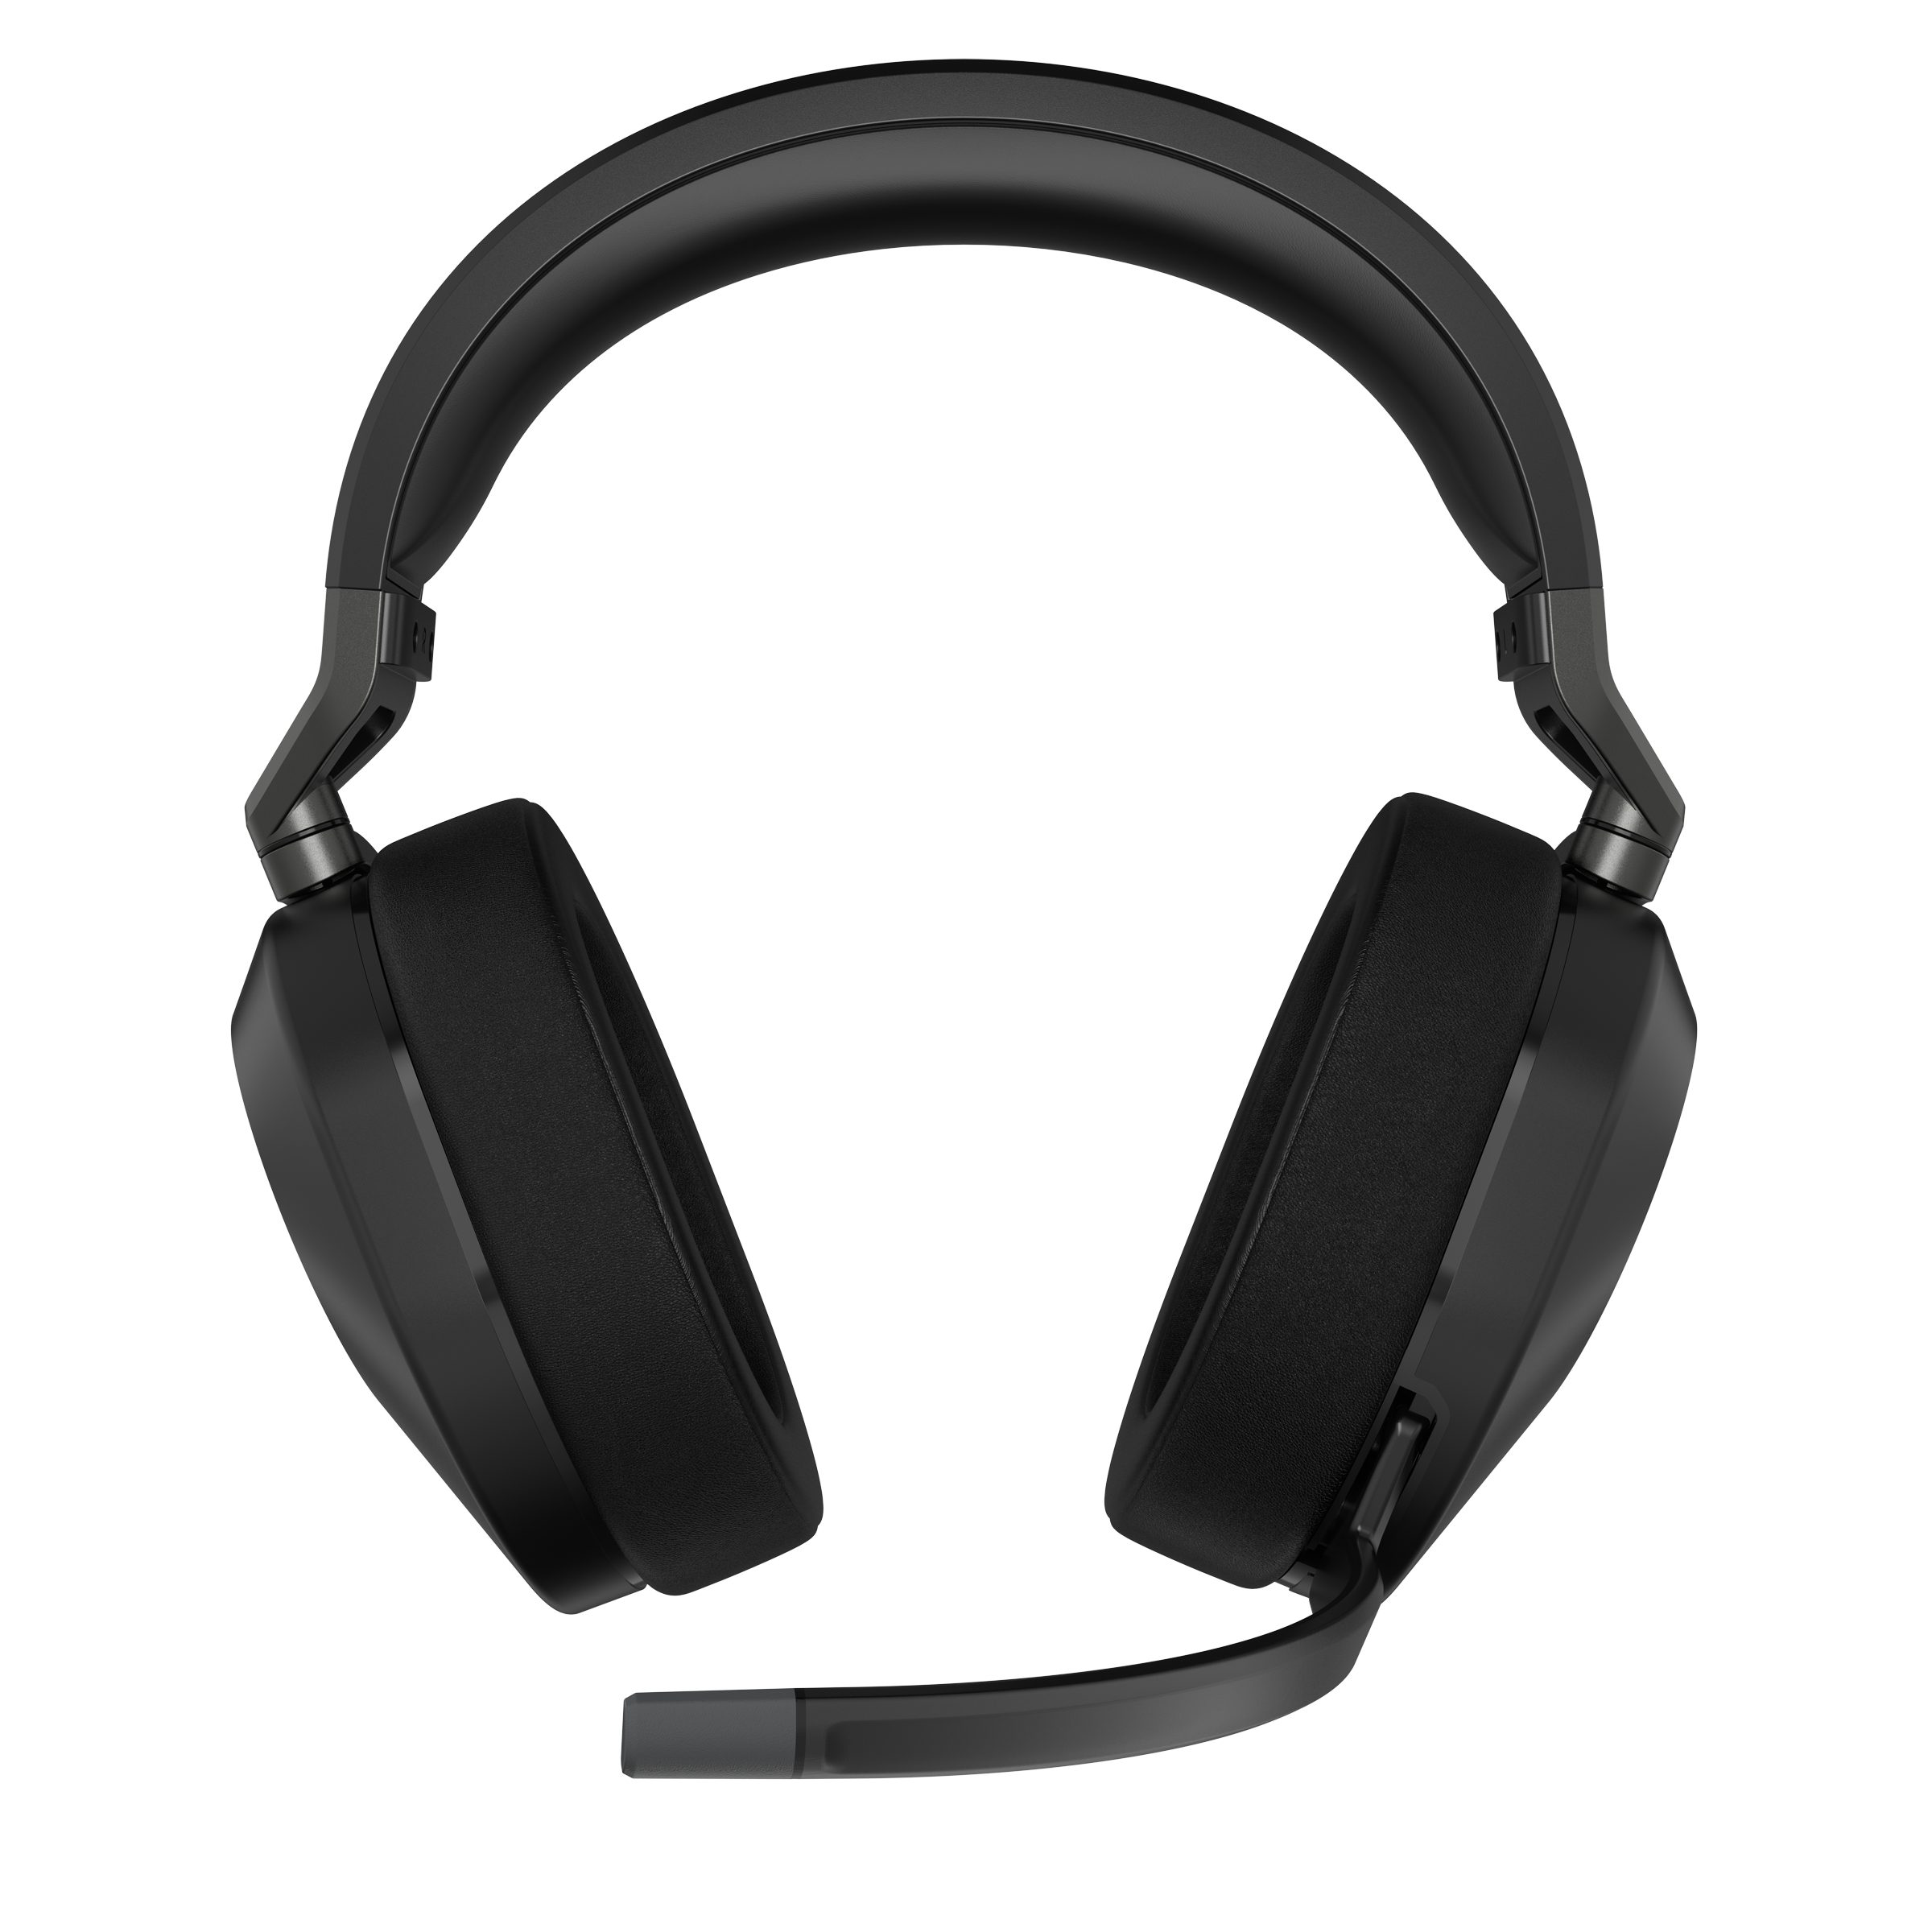 HS65 Carbon (A2DP Gaming-Headset - Corsair Wireless) Wireless Bluetooth,